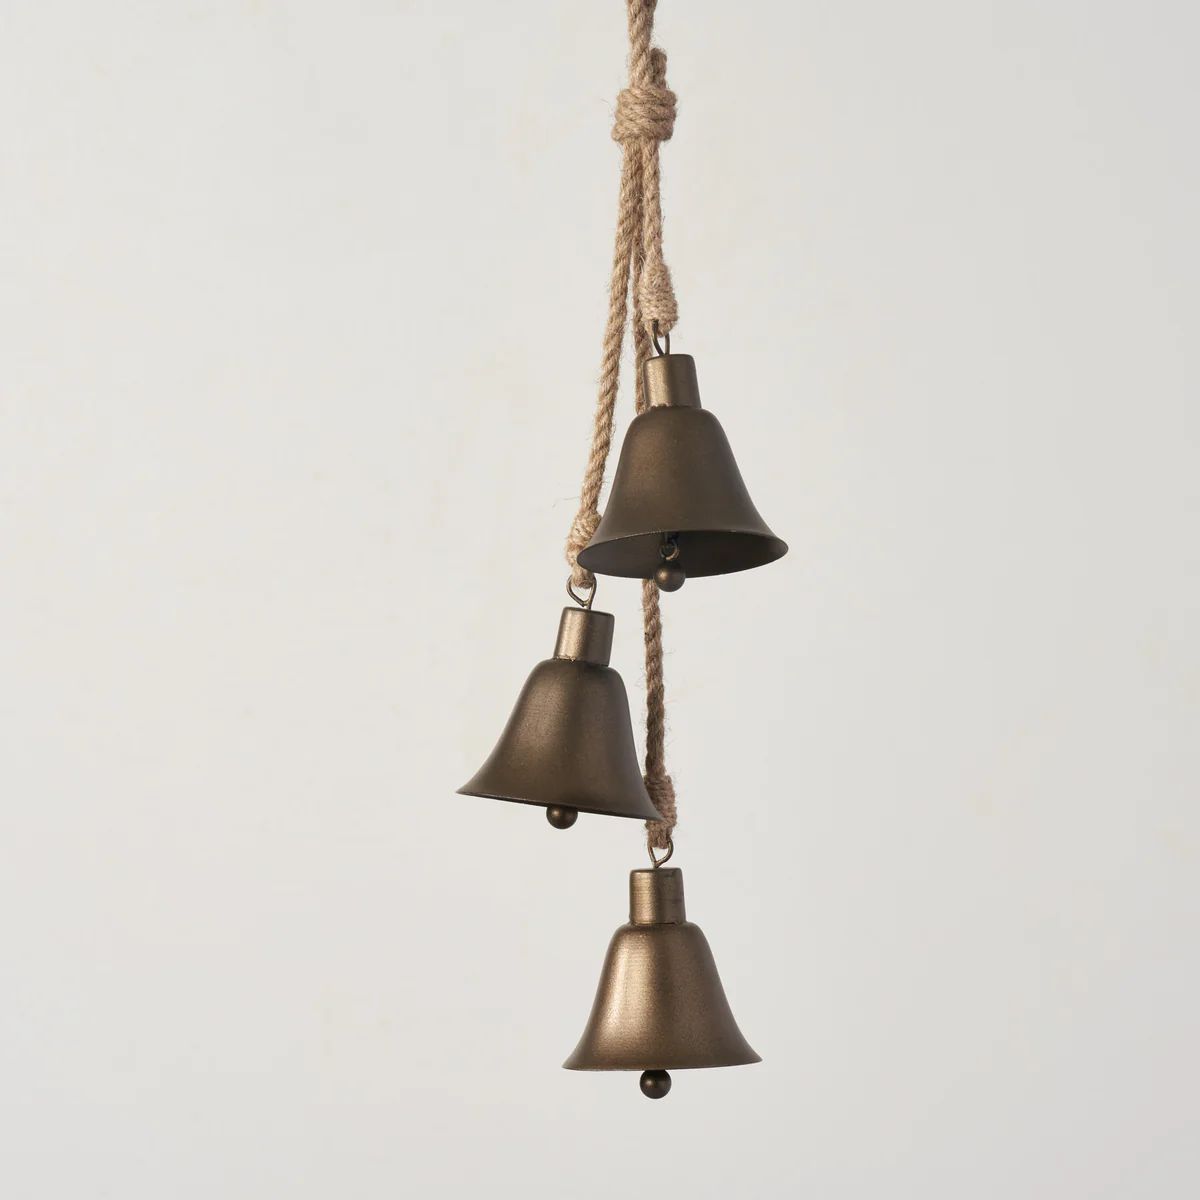 Bronze Sleek Metal Bell Ornament Hanging Decor with Jute Set of 2 | Darby Creek Trading